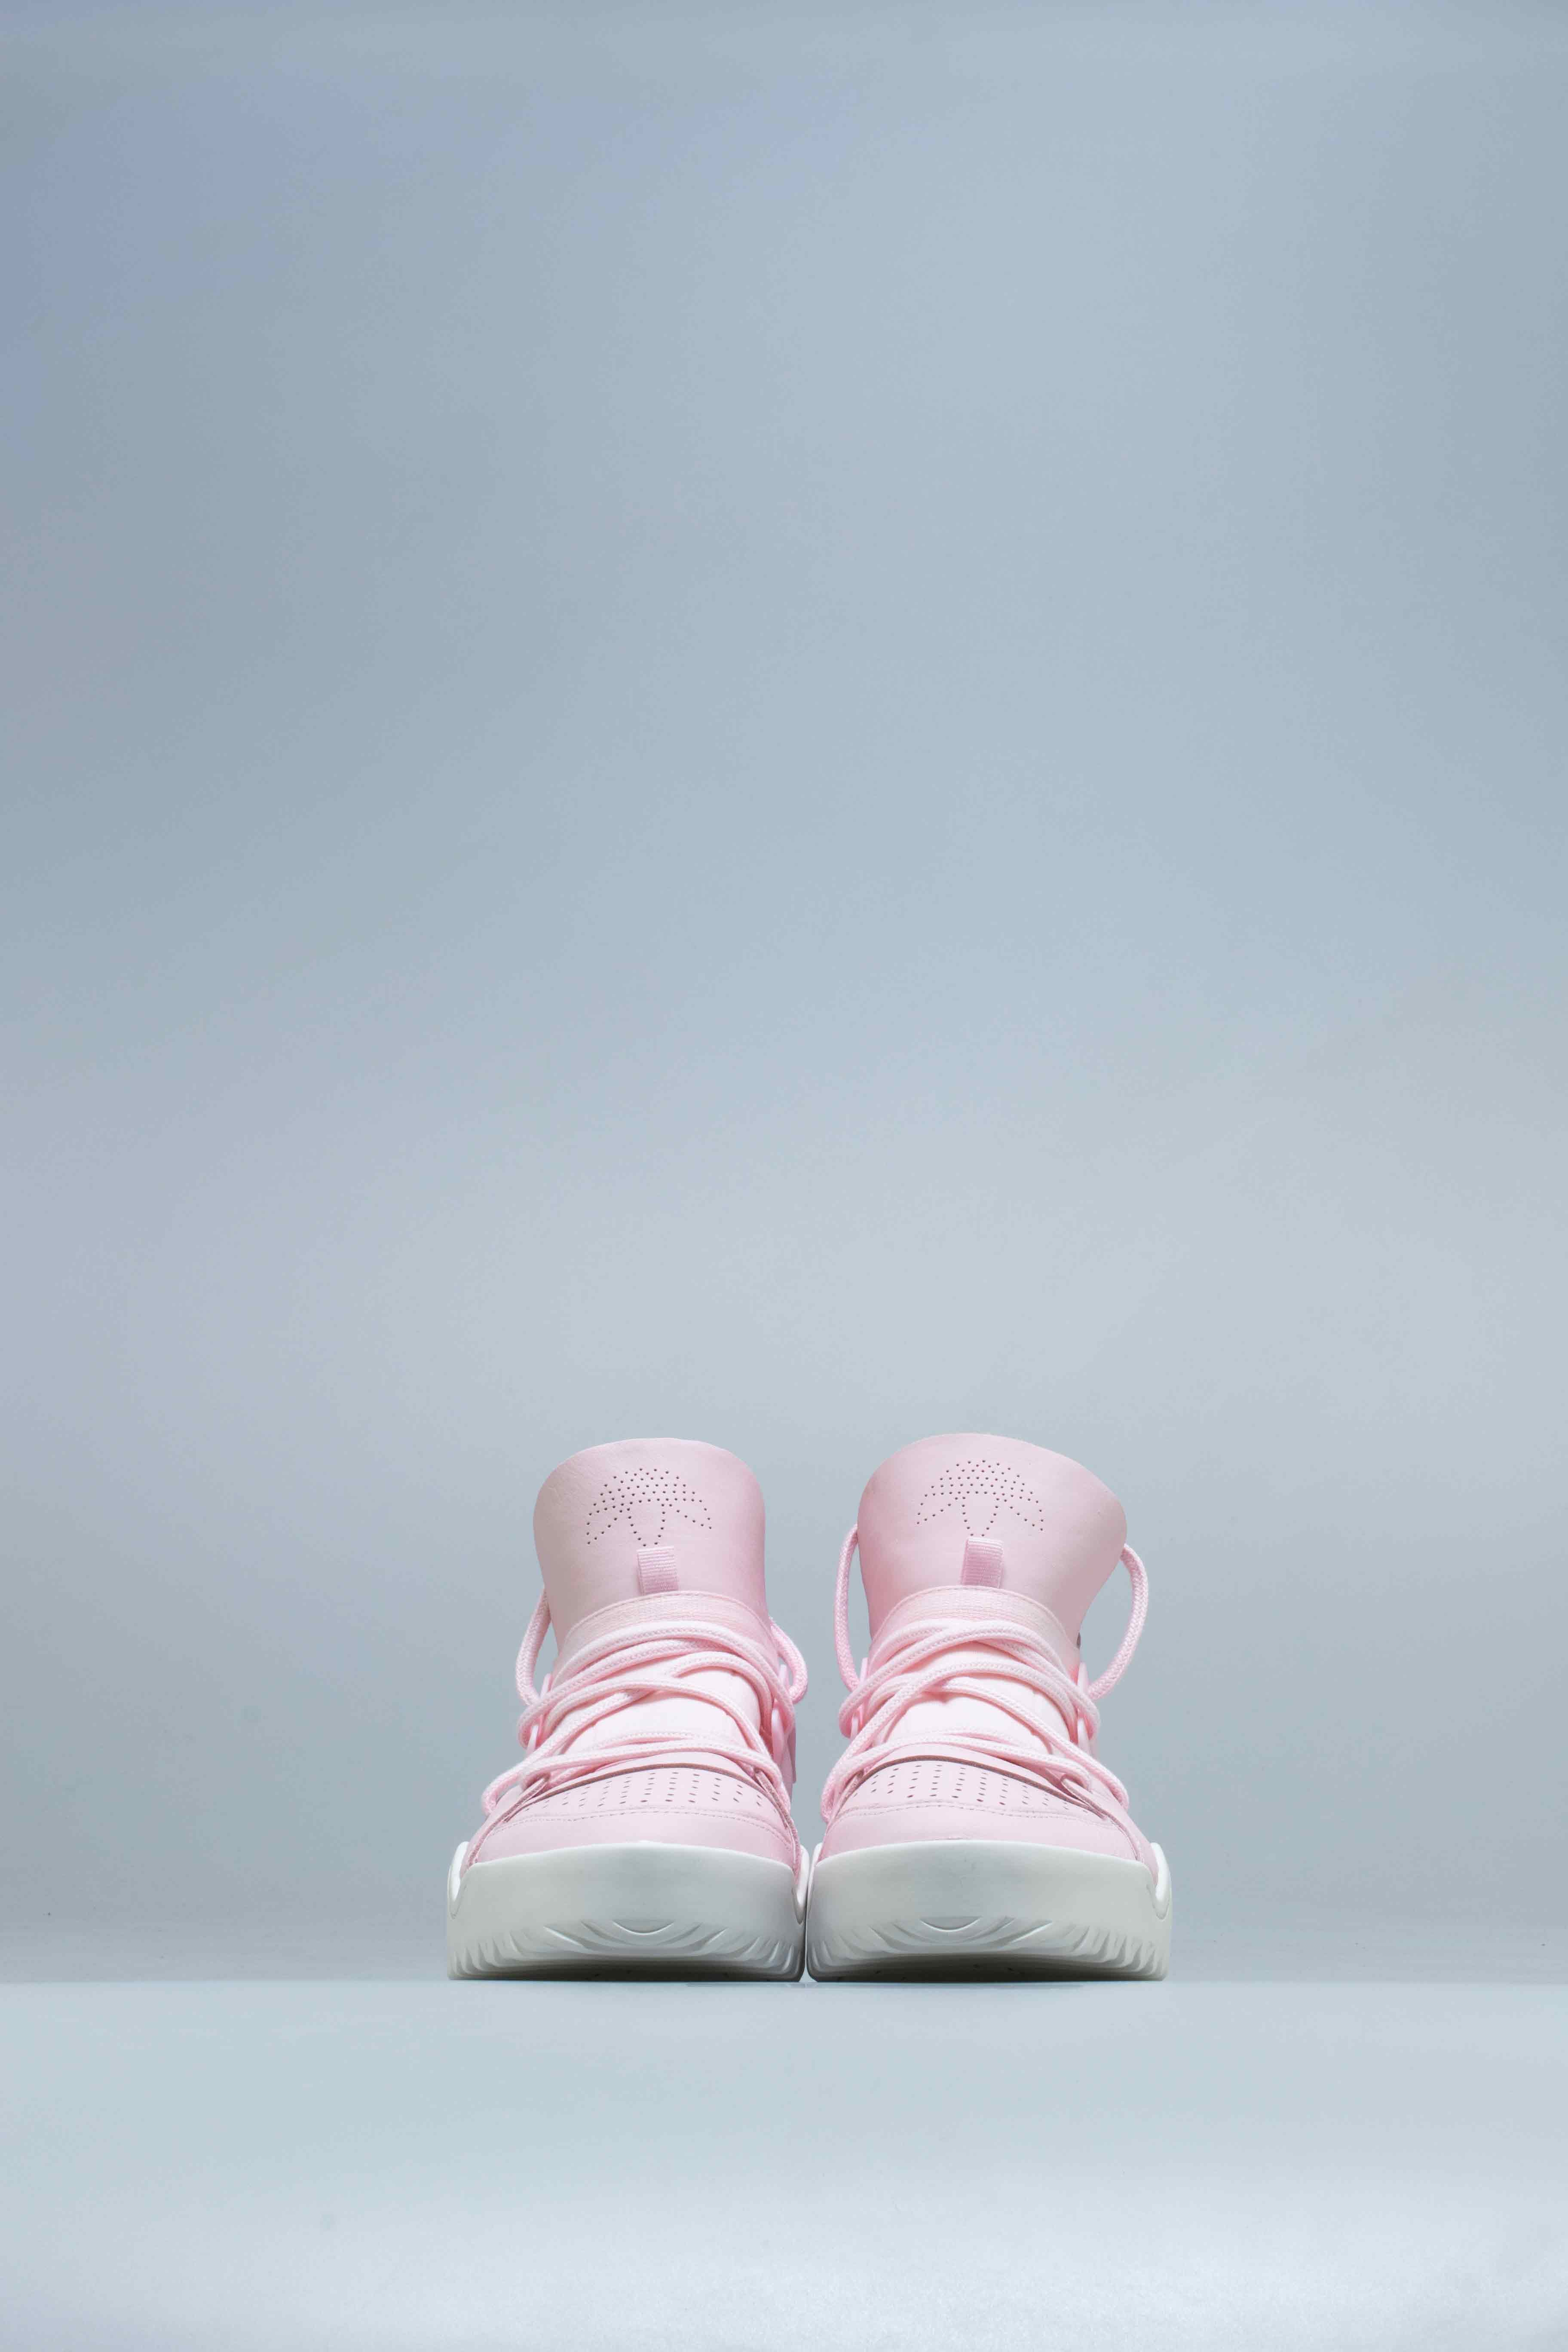 Adidas Consortium Alexander Wang X adidas Bball Mens Shoes - Pink/White – ShopNiceKicks.com